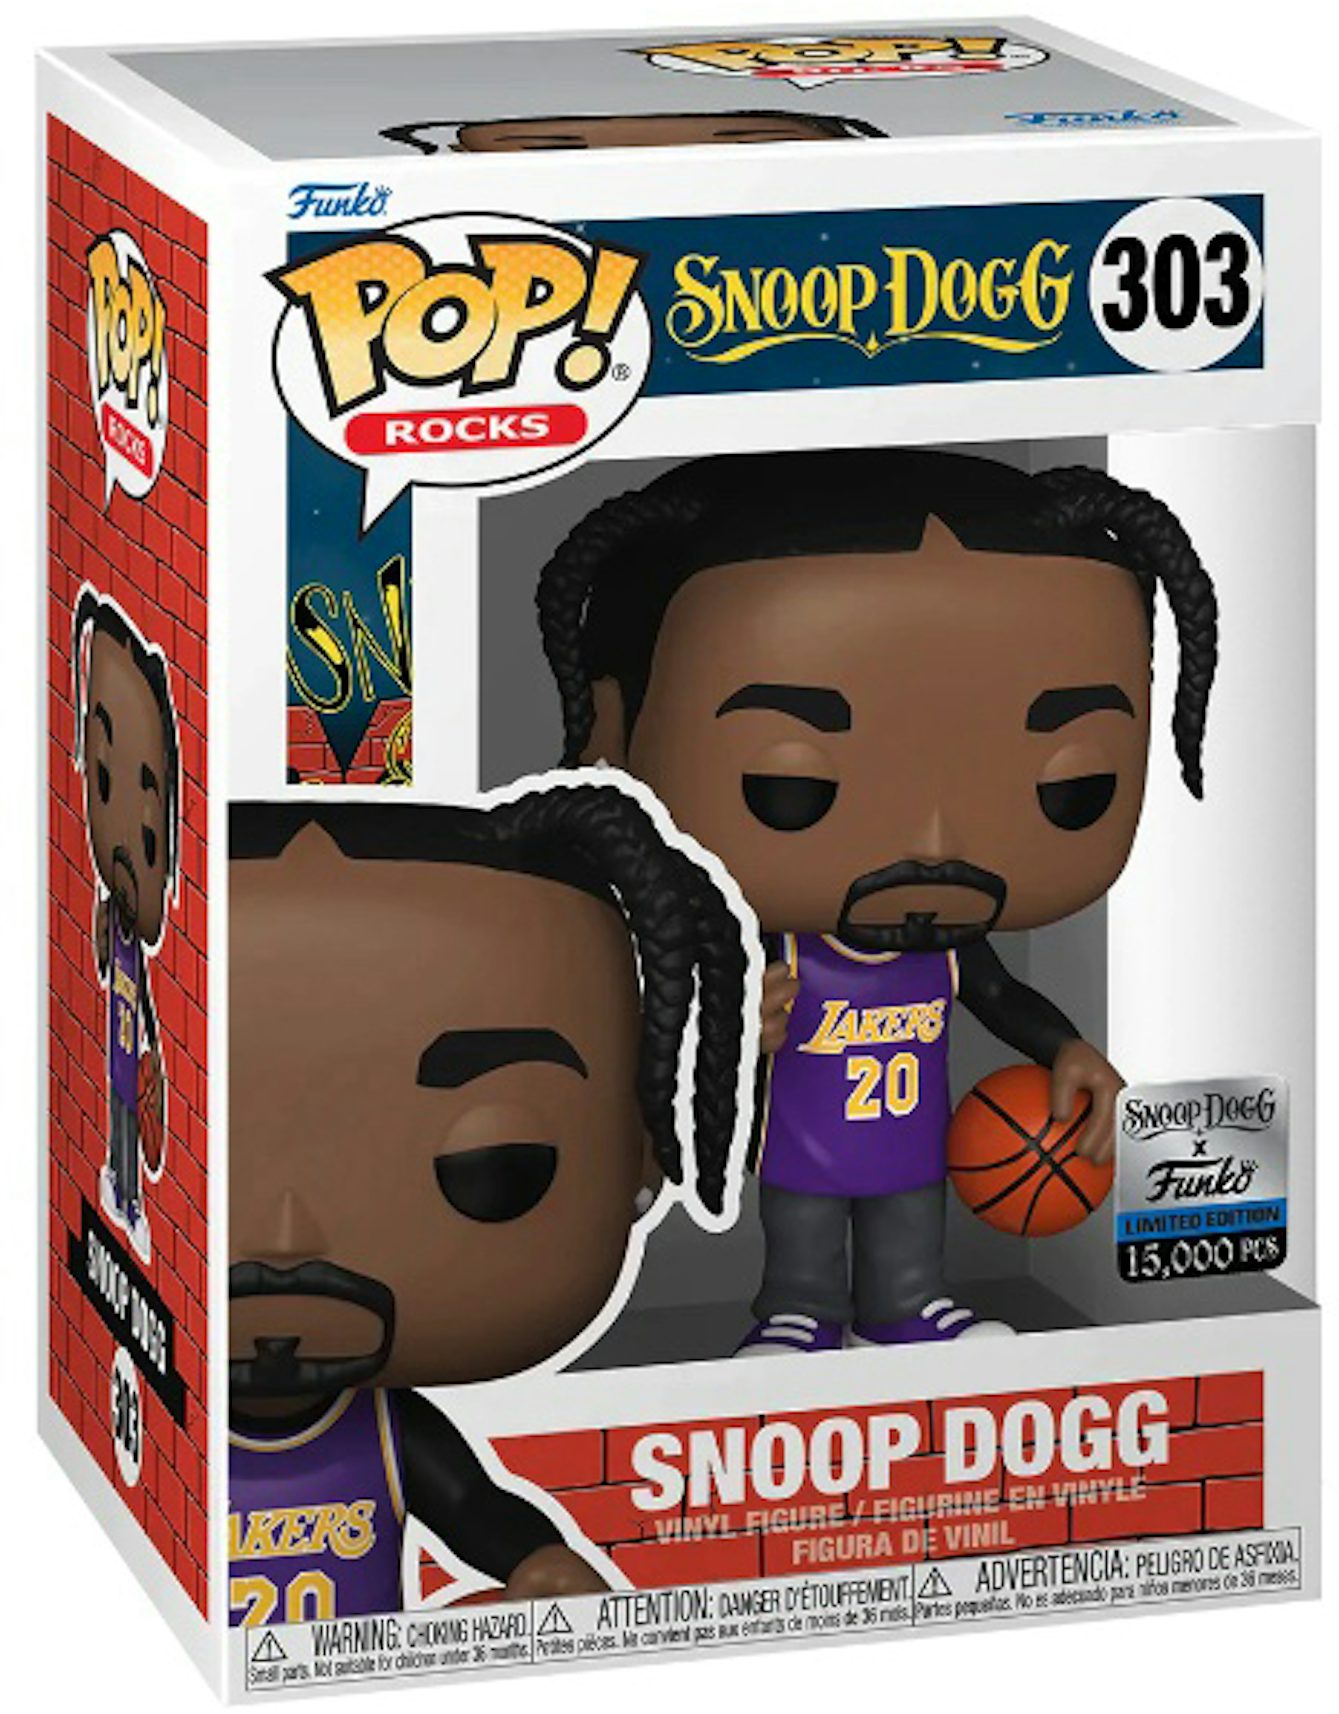 Snoop Dogg Jersey 